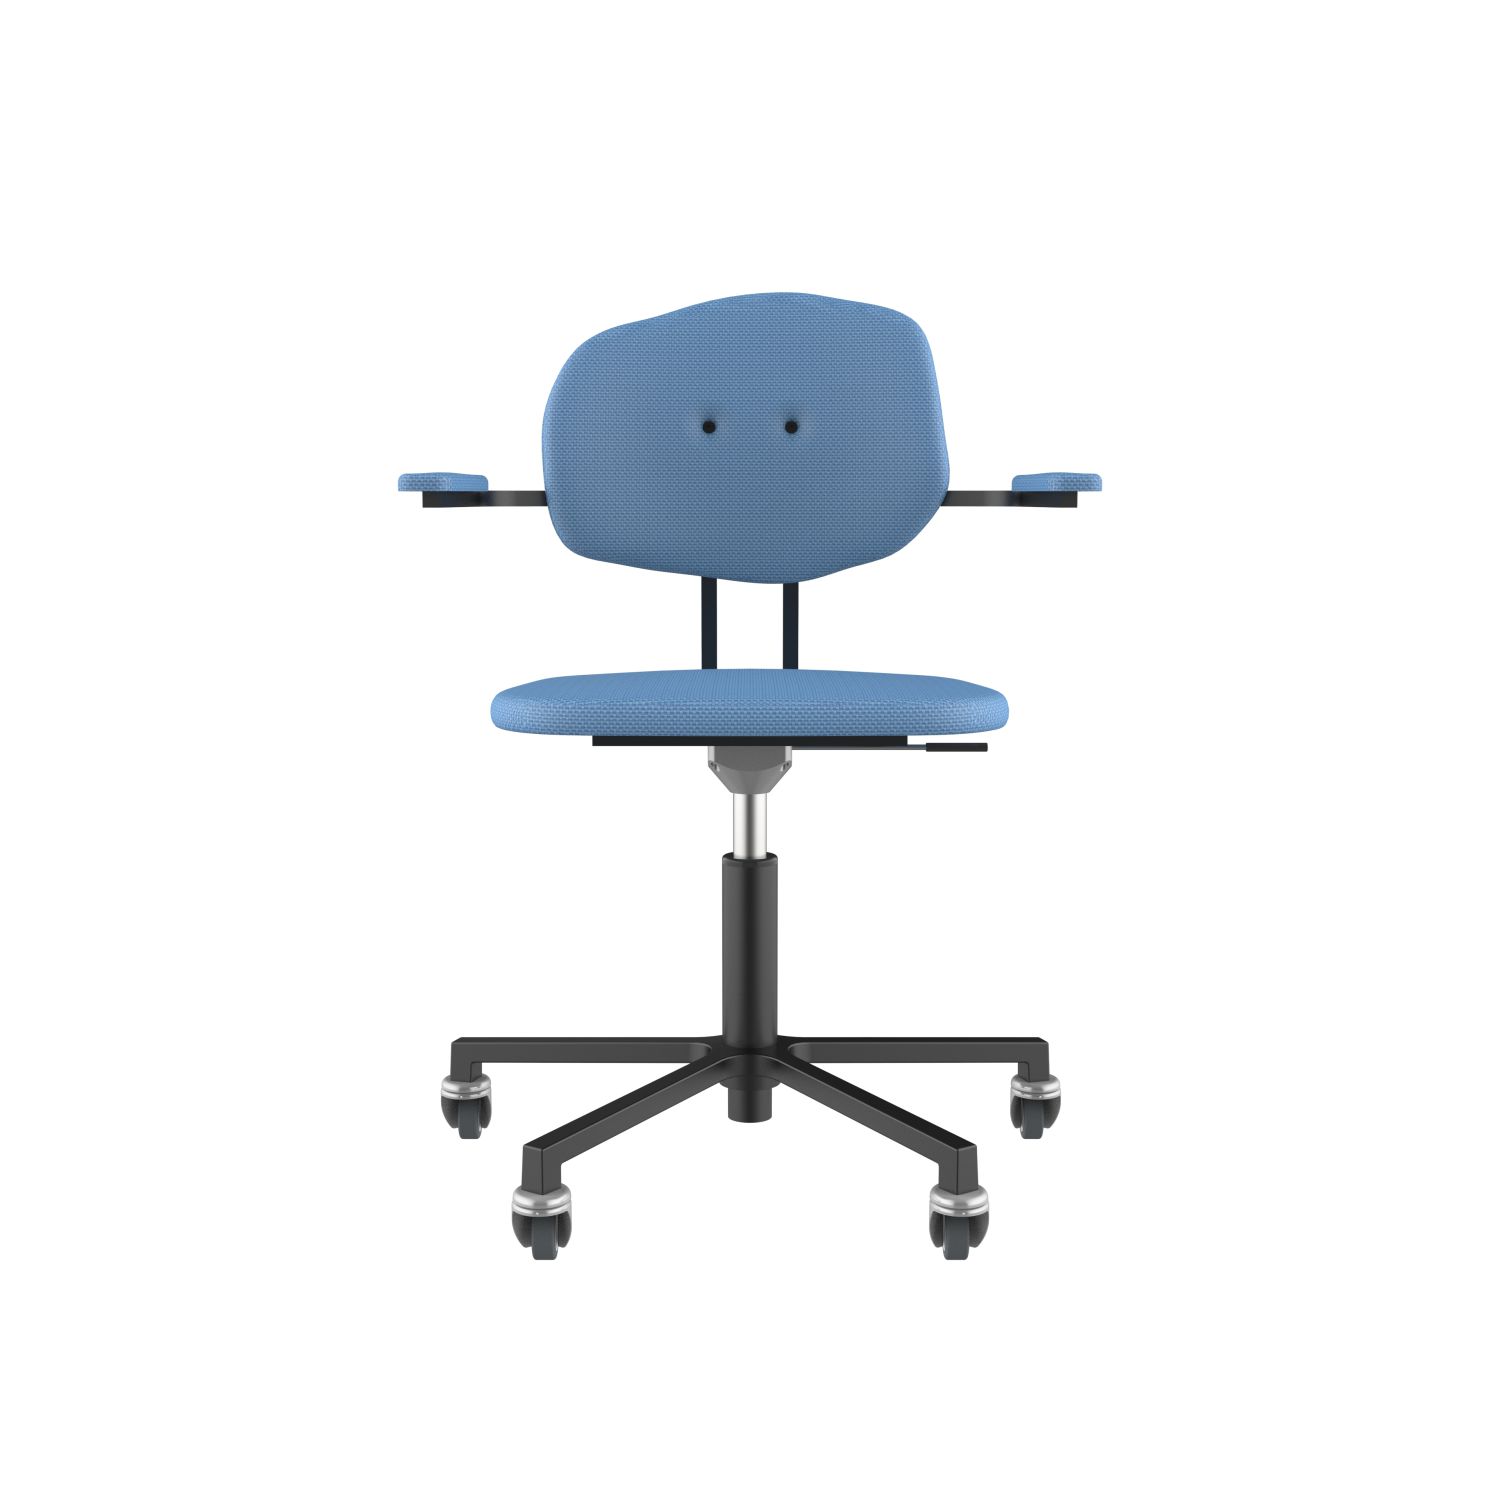 lensvelt maarten baas office chair with armrests backrest e blue horizon 040 black ral9005 soft wheels